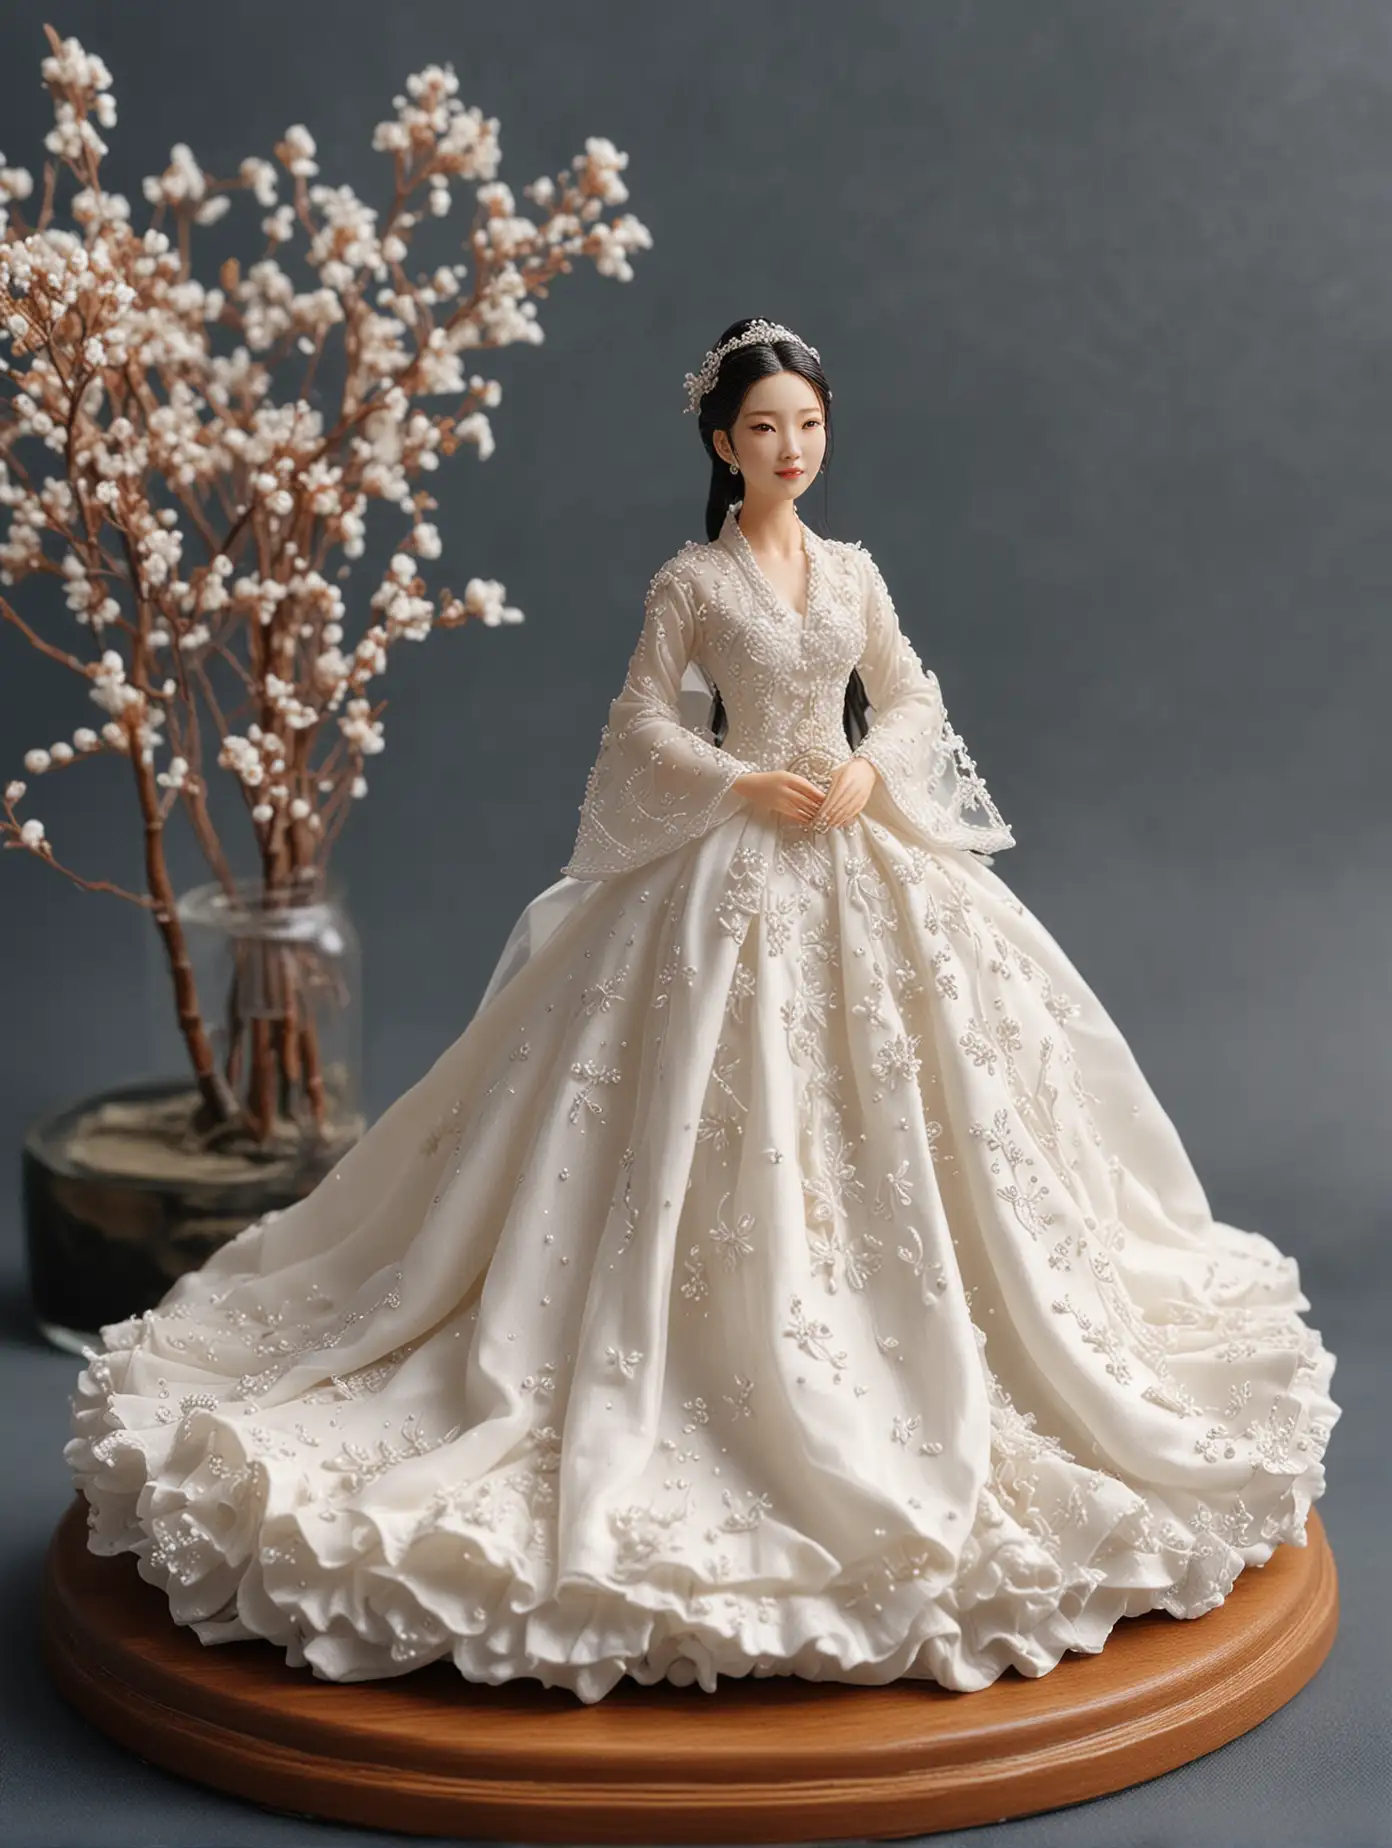 Seo Yeaji Wax Miniature in Bridal Gown Sculpture